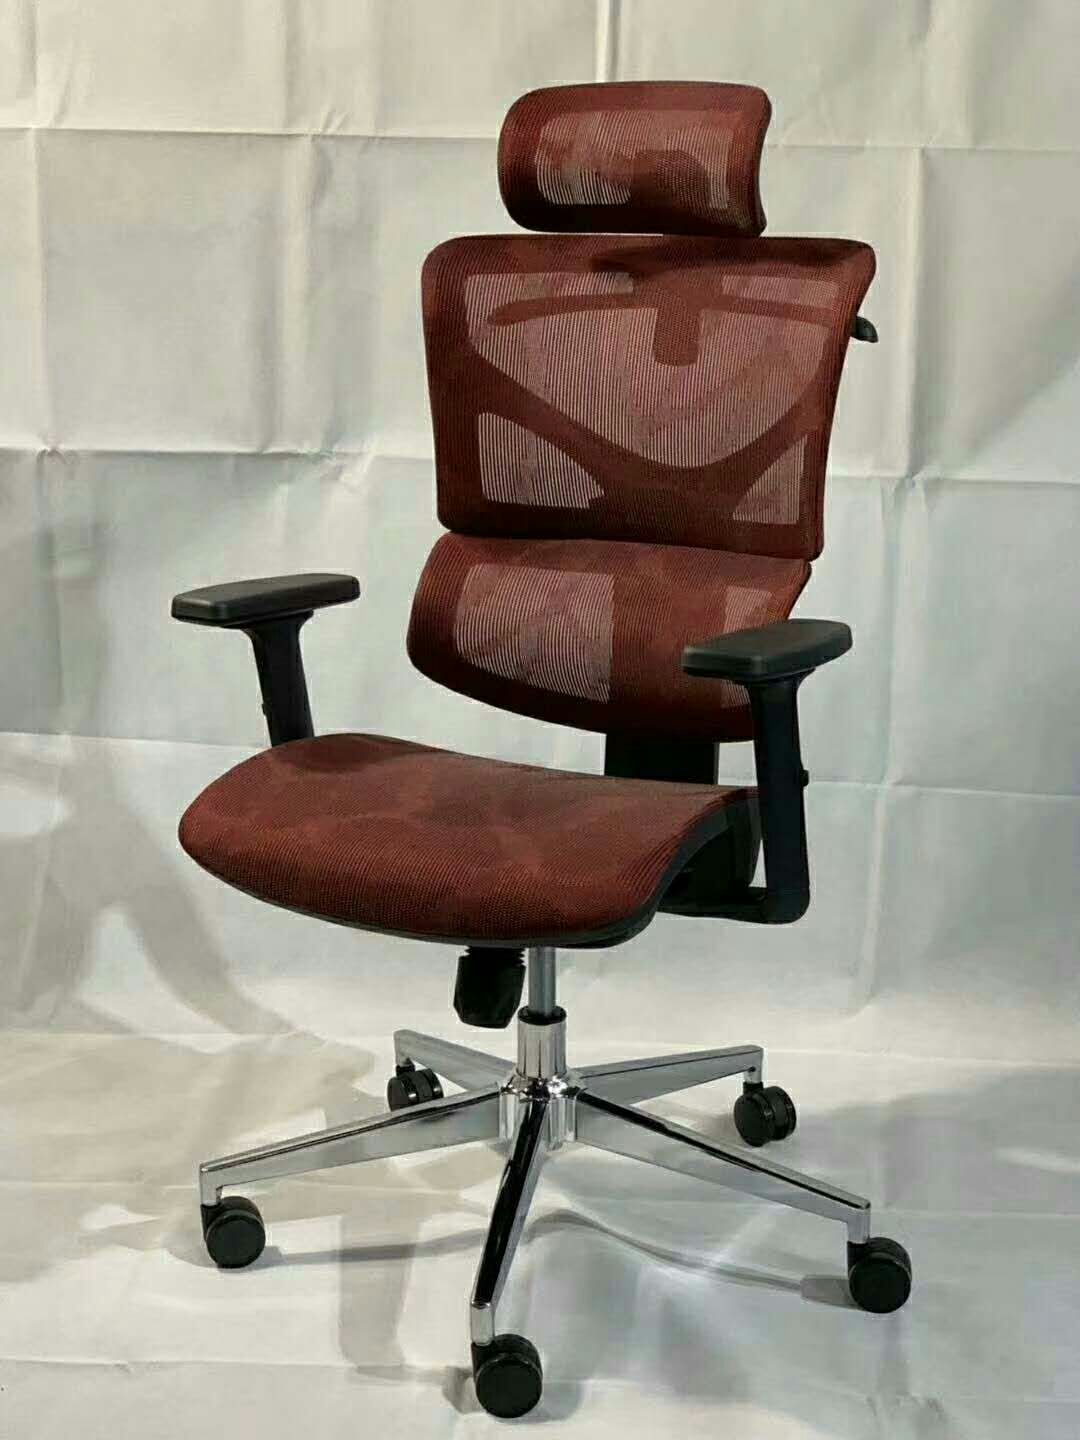 Office Orthorpedic Chair For Sale In Ghana